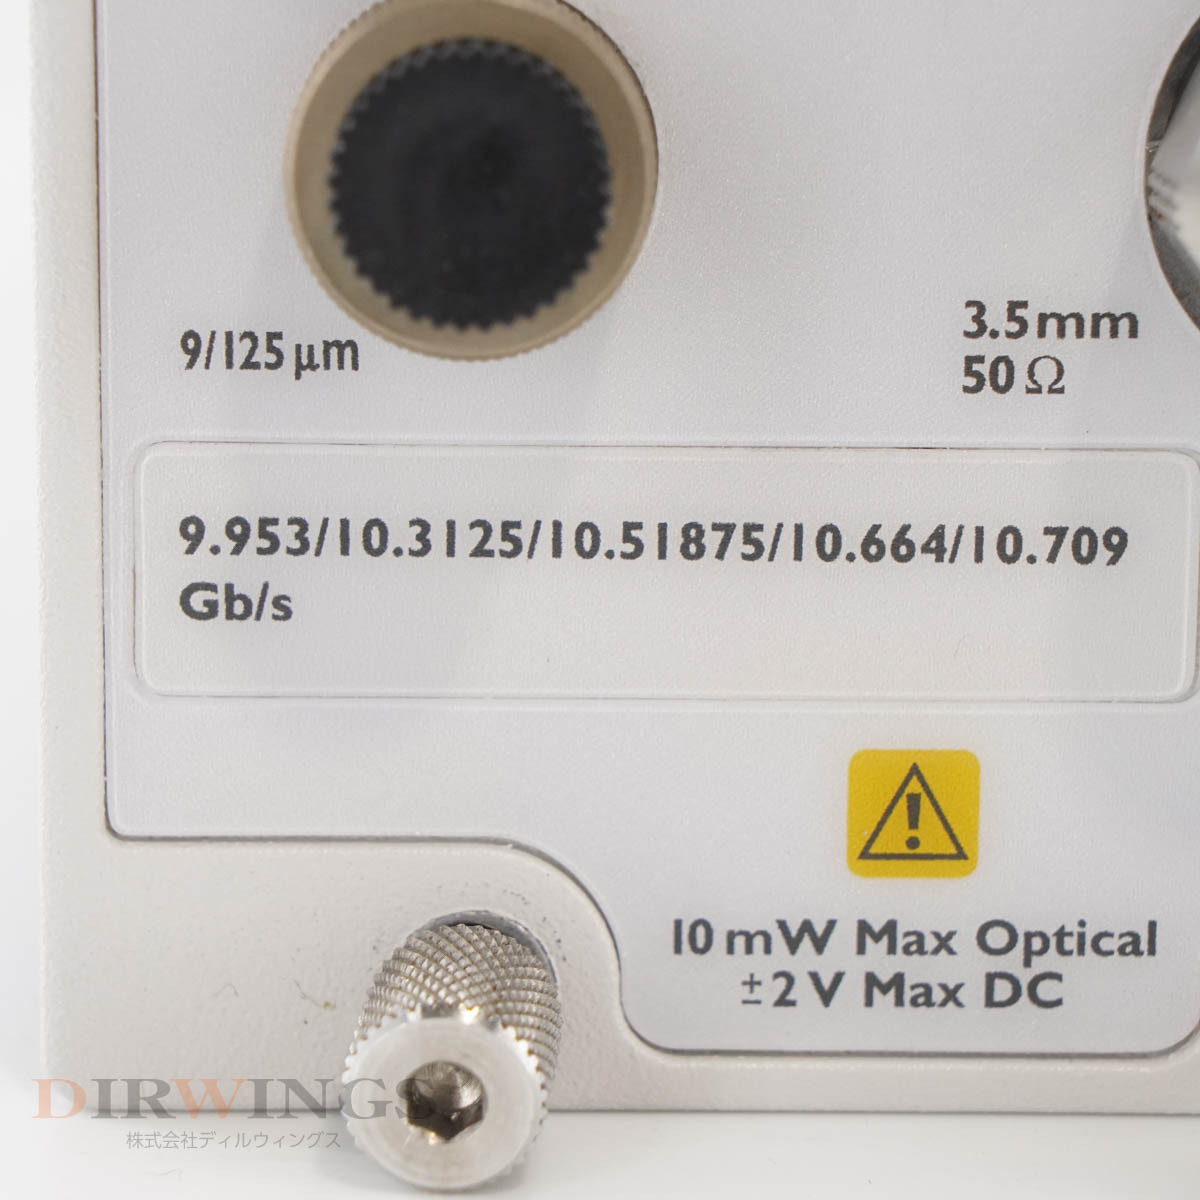 [JB] 保証なし 86105B ATO-620 Agilent OPT 101 UK6 1000-1600nm アジレント hp Keysight Optical/Electrical Module 光/電...[05791-0560]_画像6